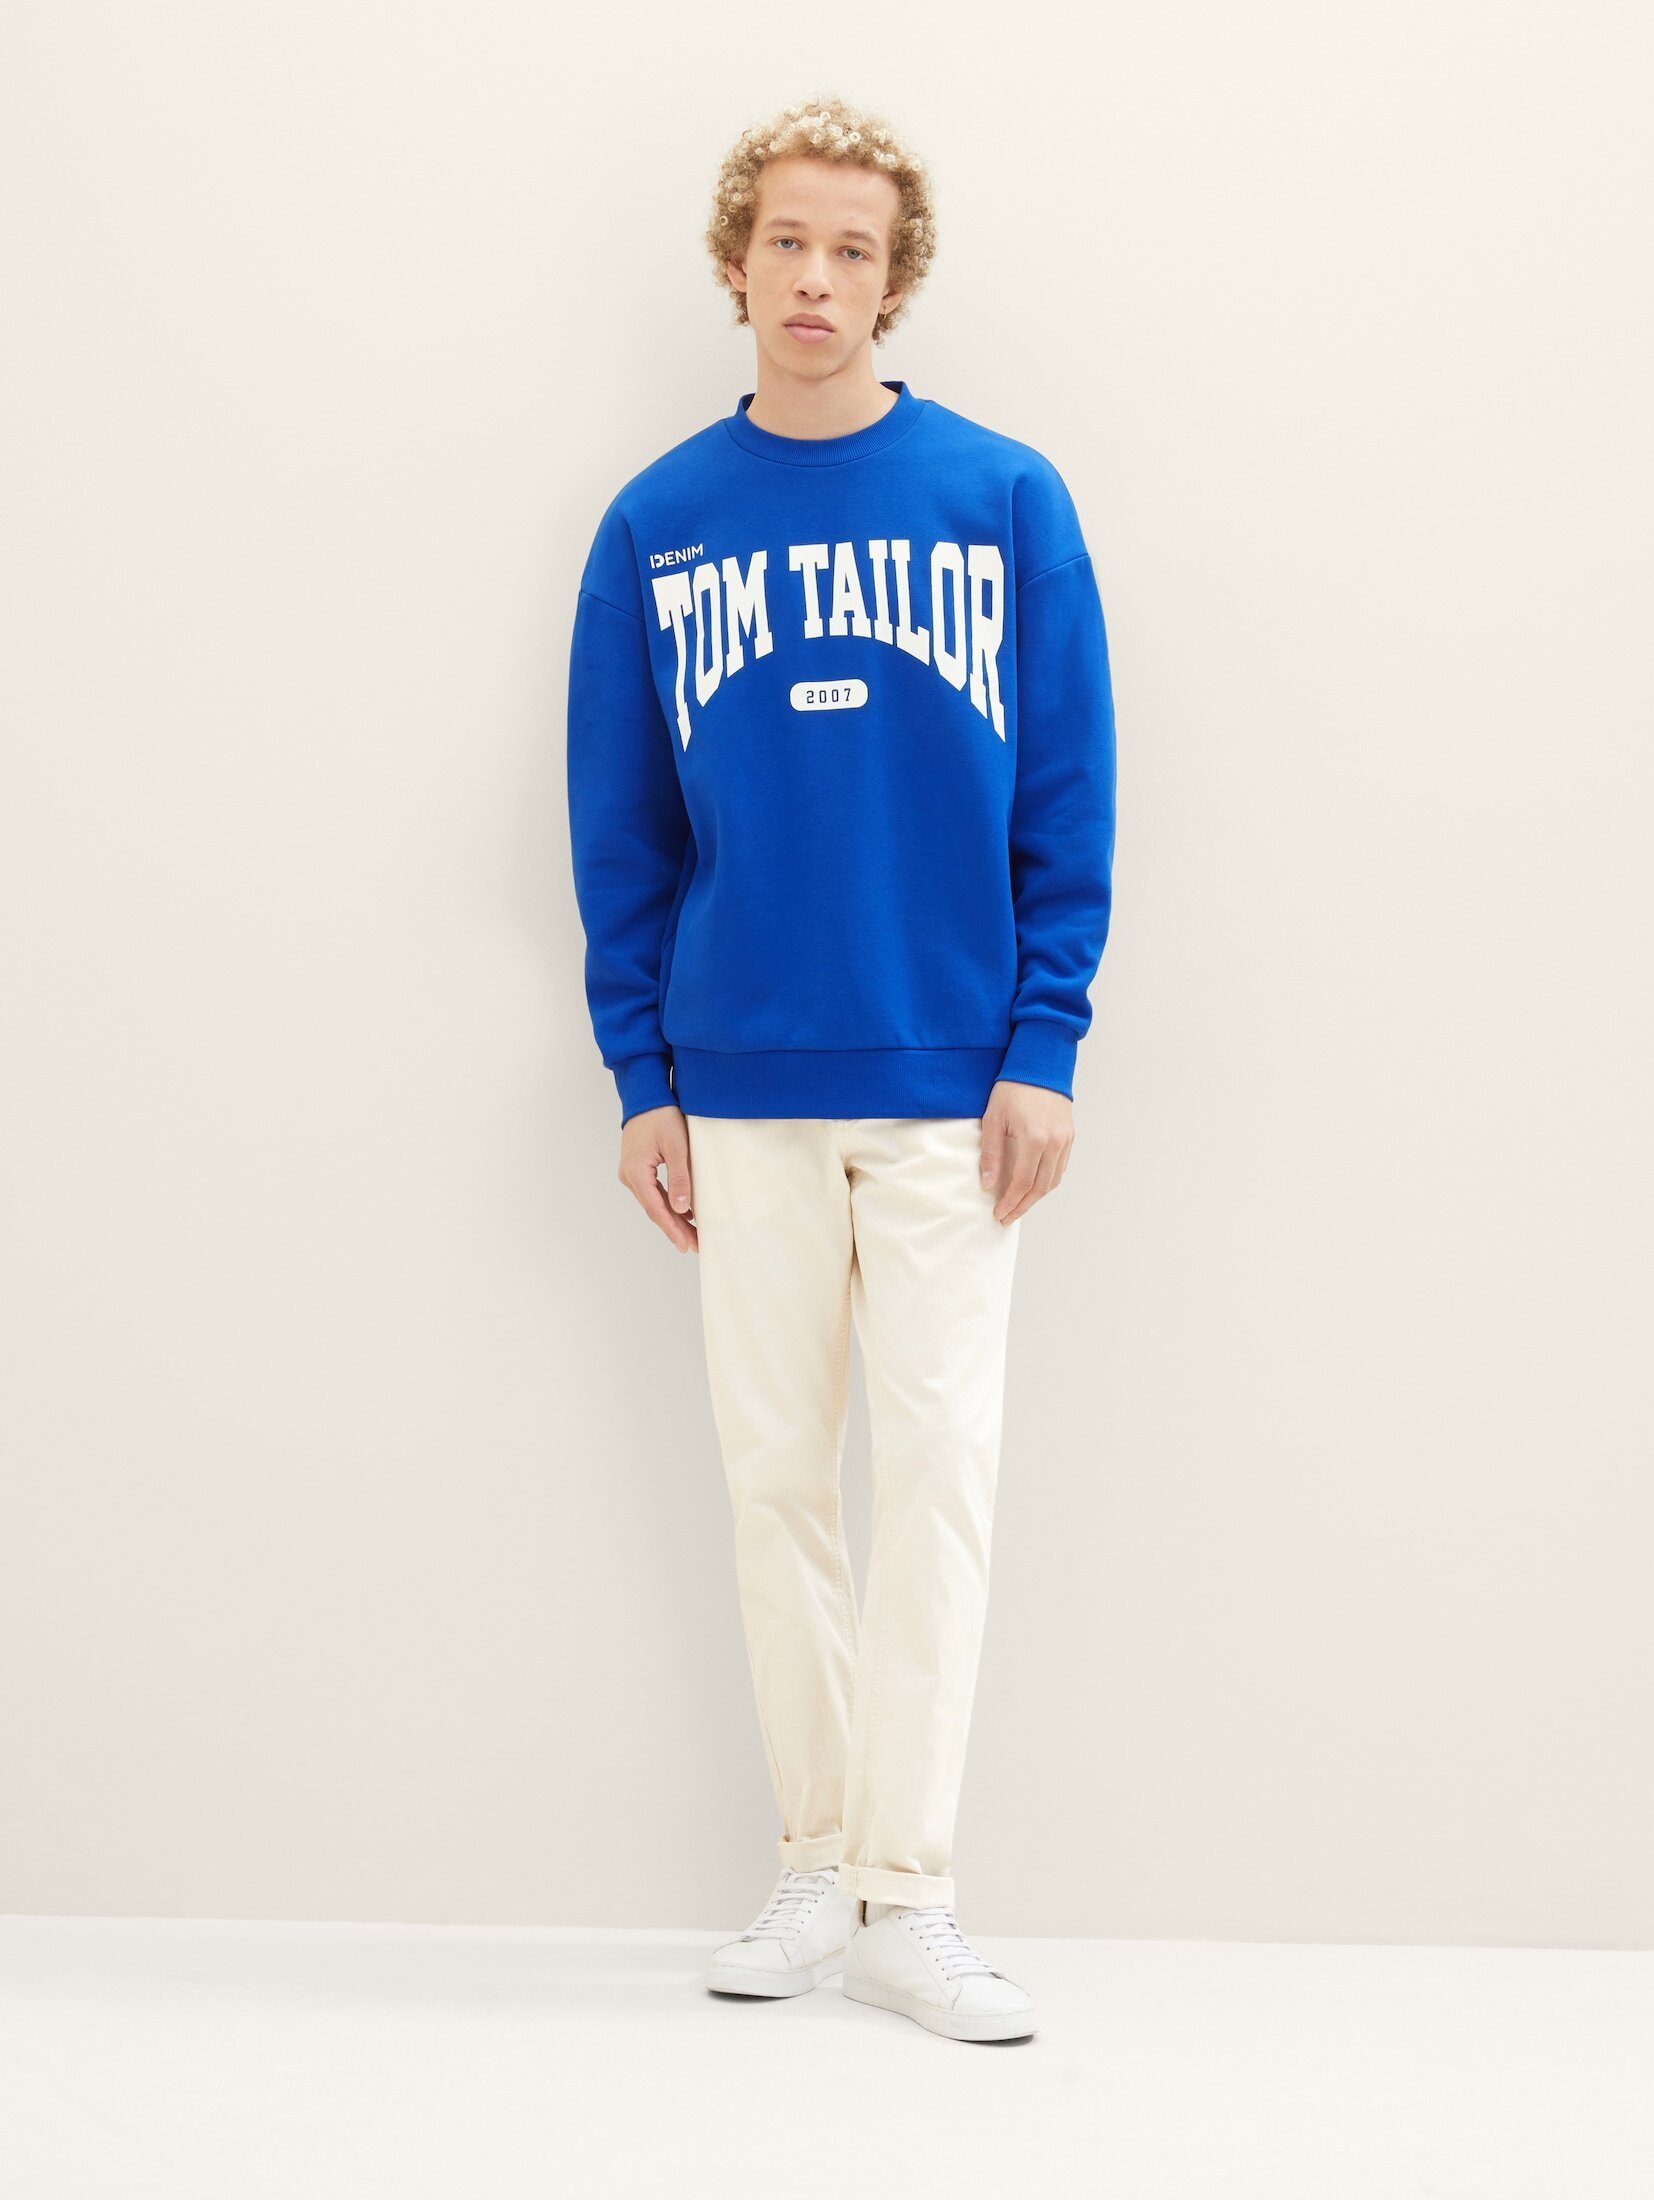 blue Print mit Denim shiny TAILOR TOM royal Logo Sweatshirt Hoodie